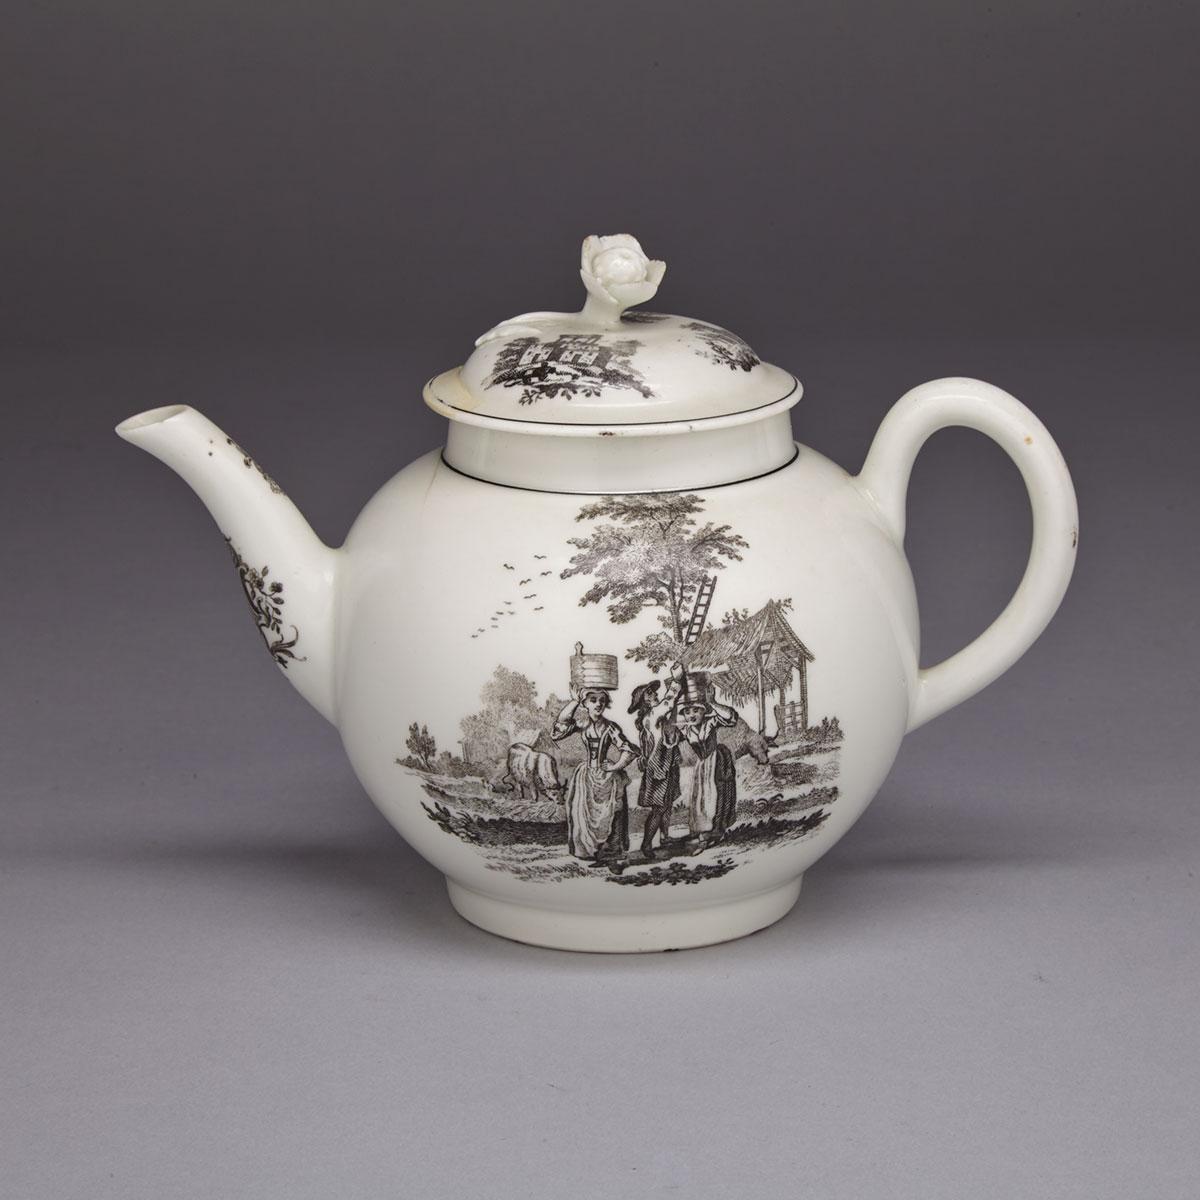 Worcester Black Printed Globular Teapot, c.1765-70